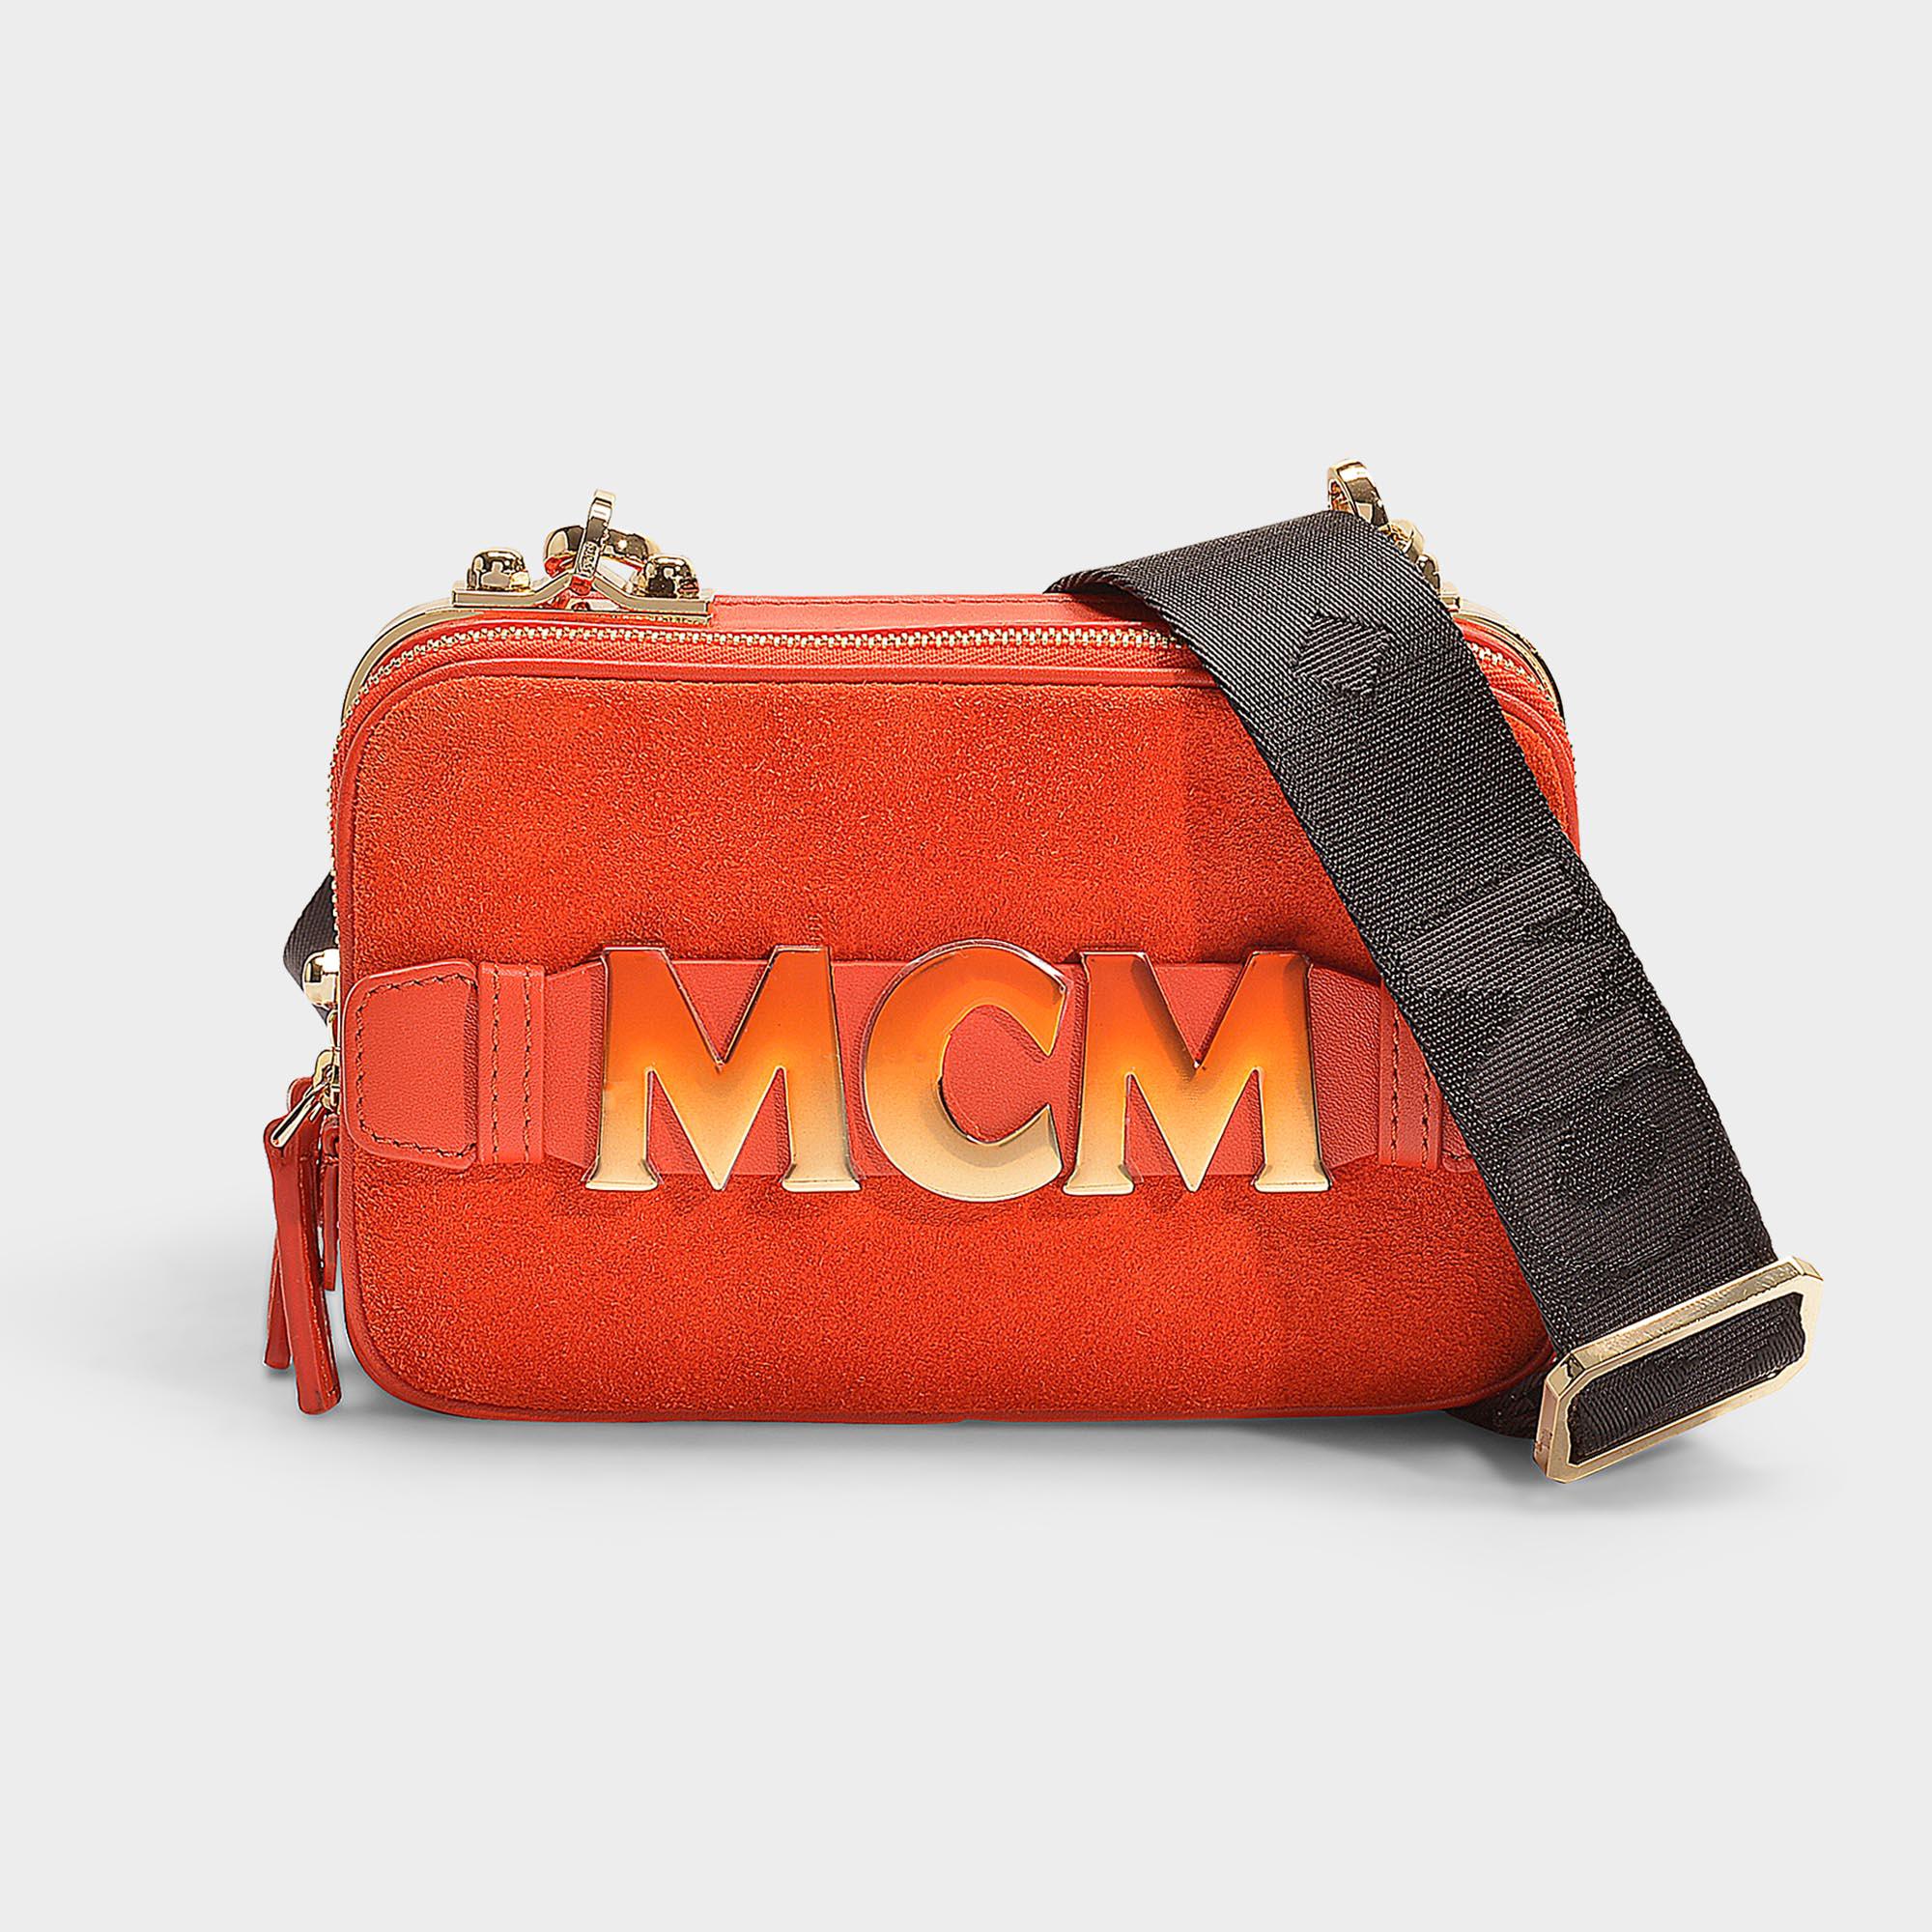 MCM Cubism Suede Leather Mini Crossbody Bag In Orange And Beige Calfskin - Lyst